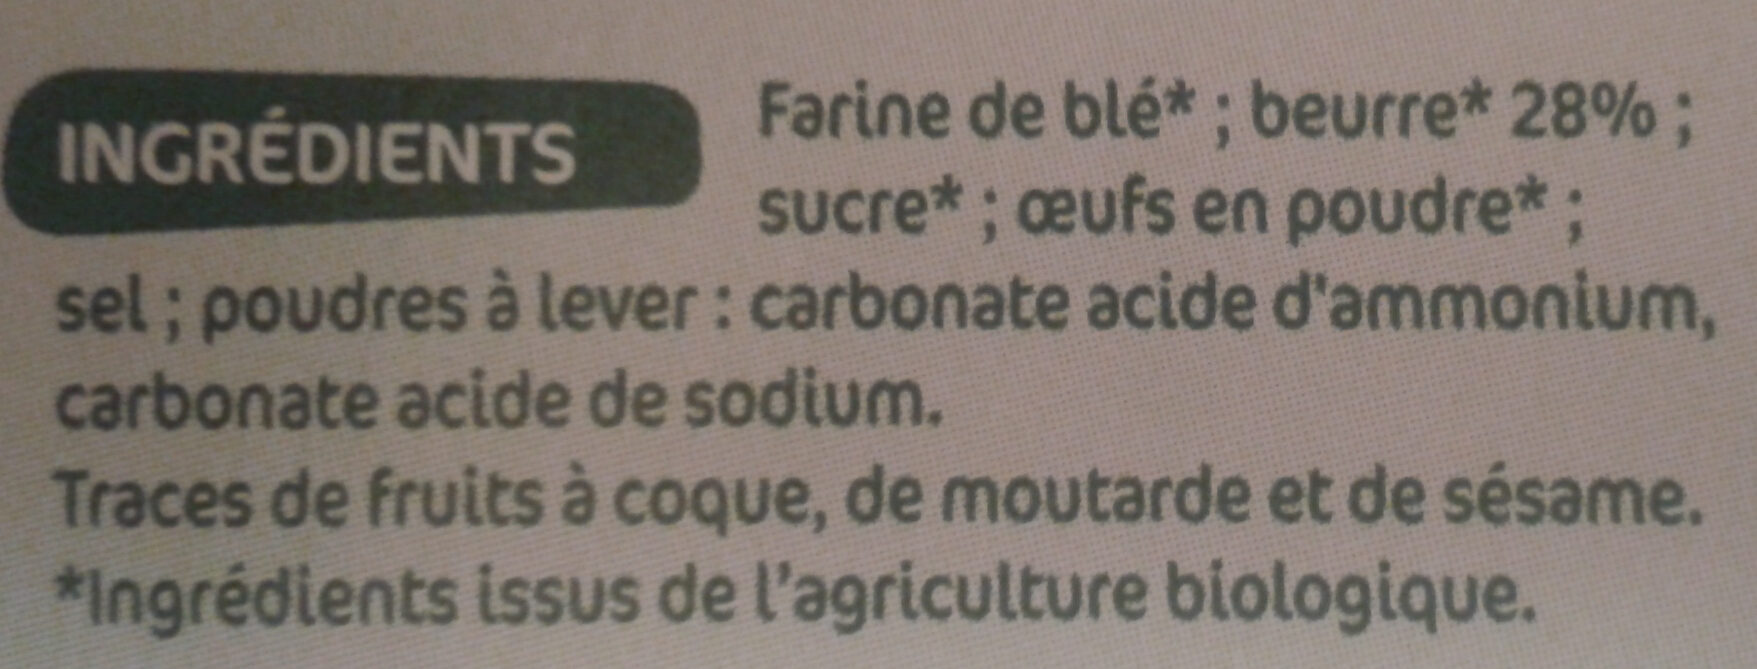 Galette pur beurre - Ingrediënten - fr